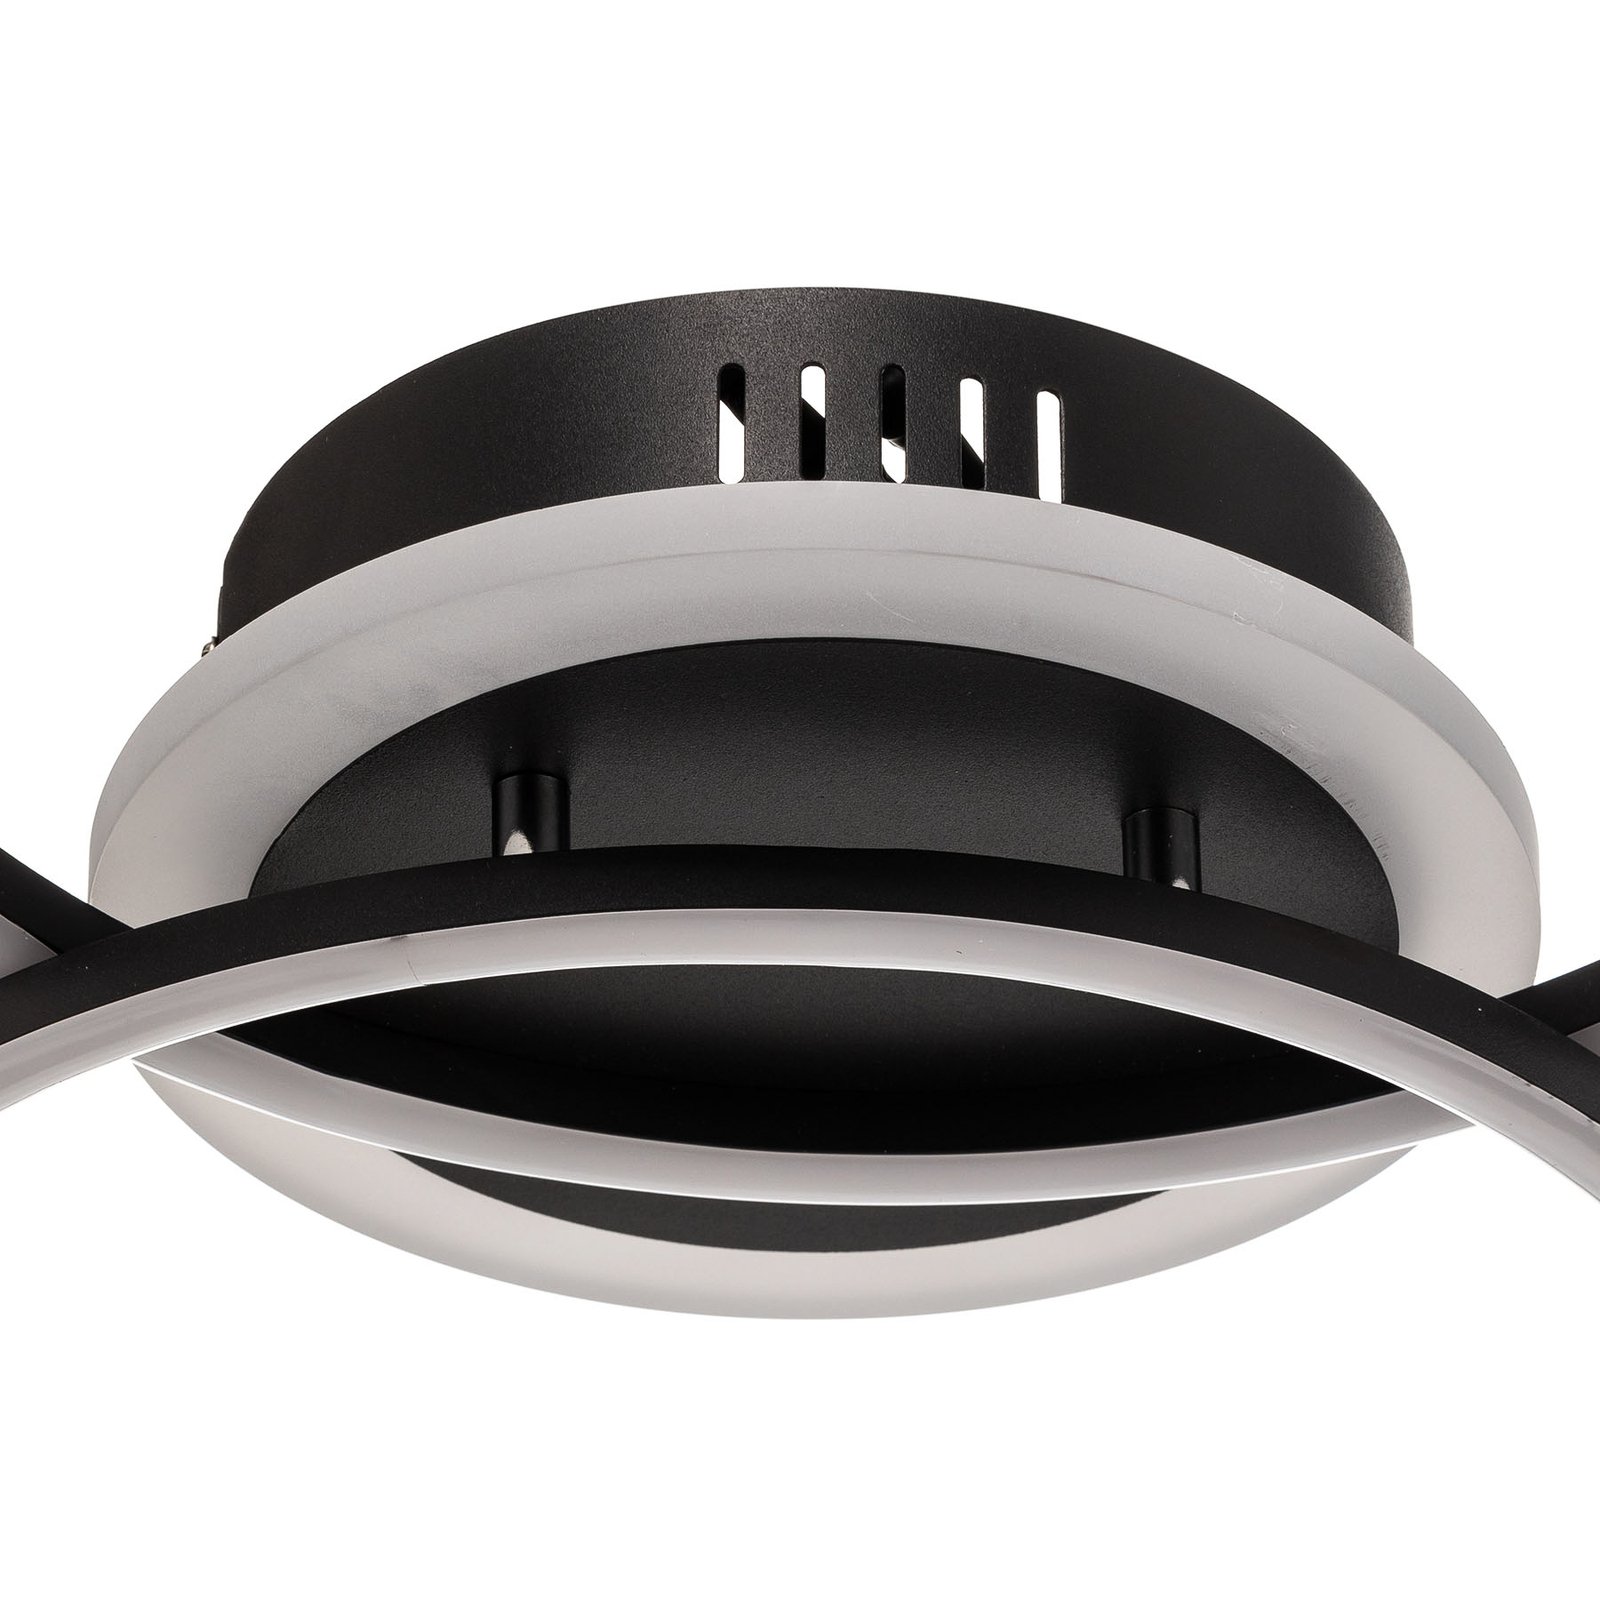 Venida LED ceiling light in a ring design, black